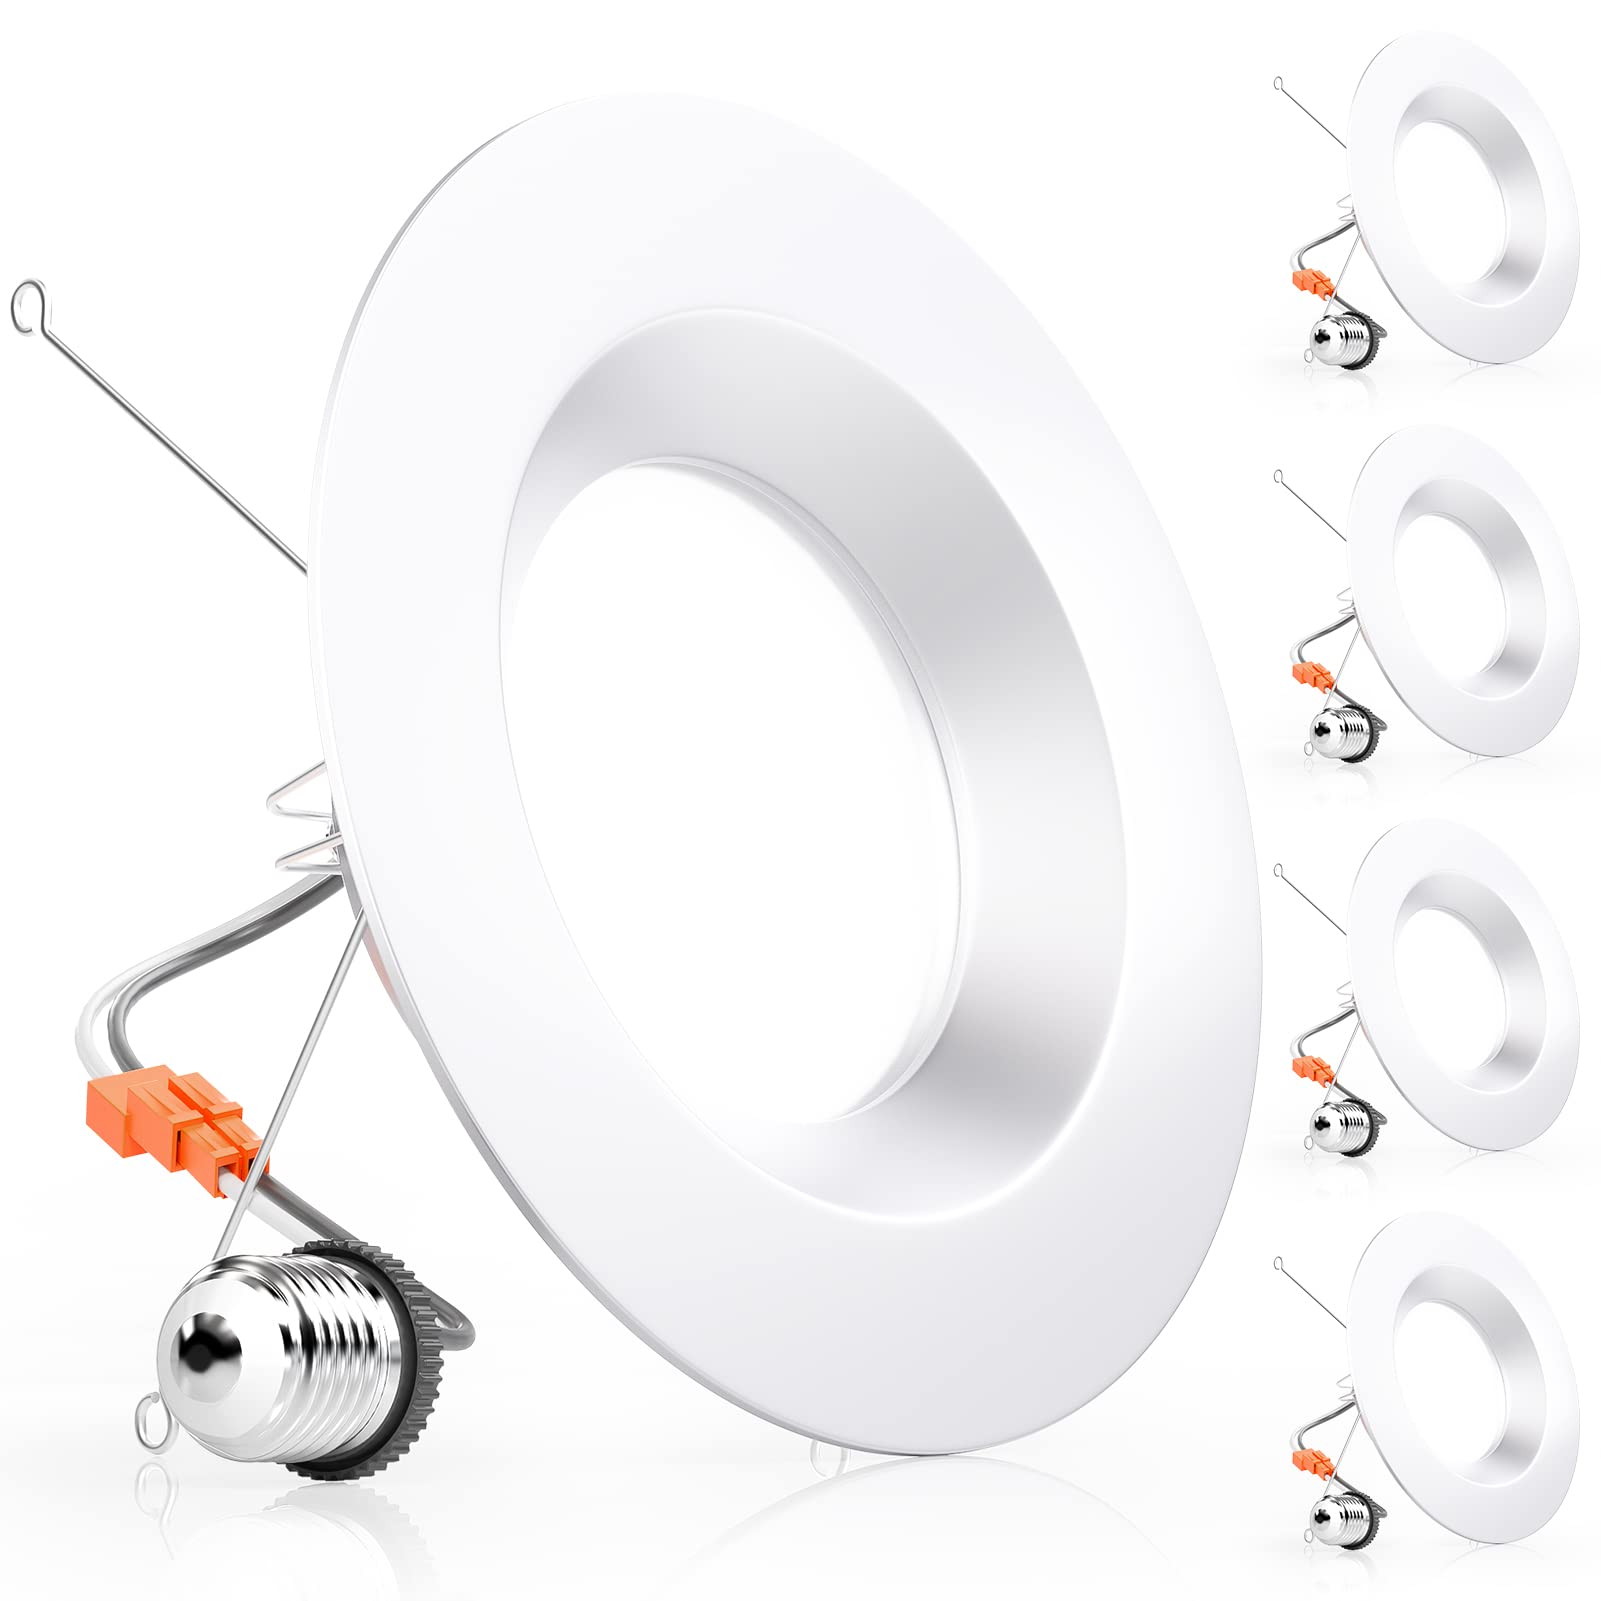 4-Pack Ensenior 5/6 Inch LED Recessed Lighting $15 at Ensenior Direct via Amazon